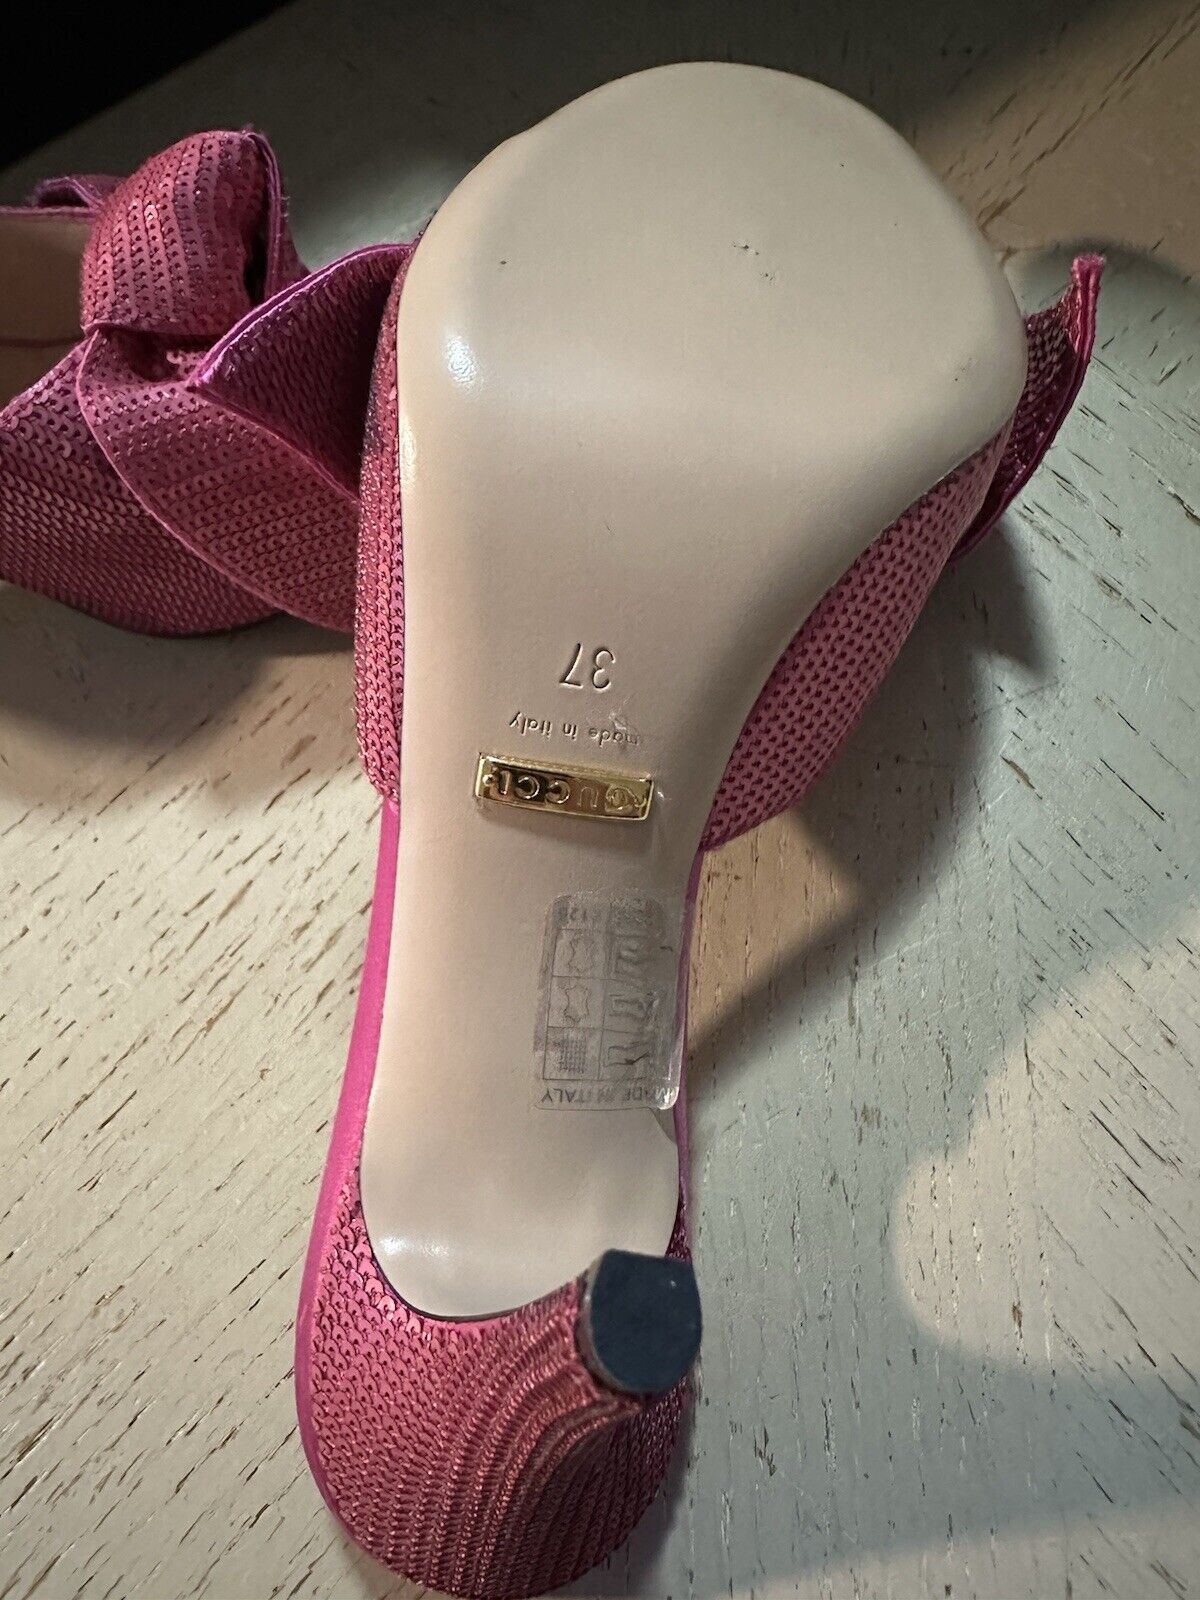 Gucci Women Bow Detail Satin Sandal Shoes Pink 7 US/37 Eu 724325 New